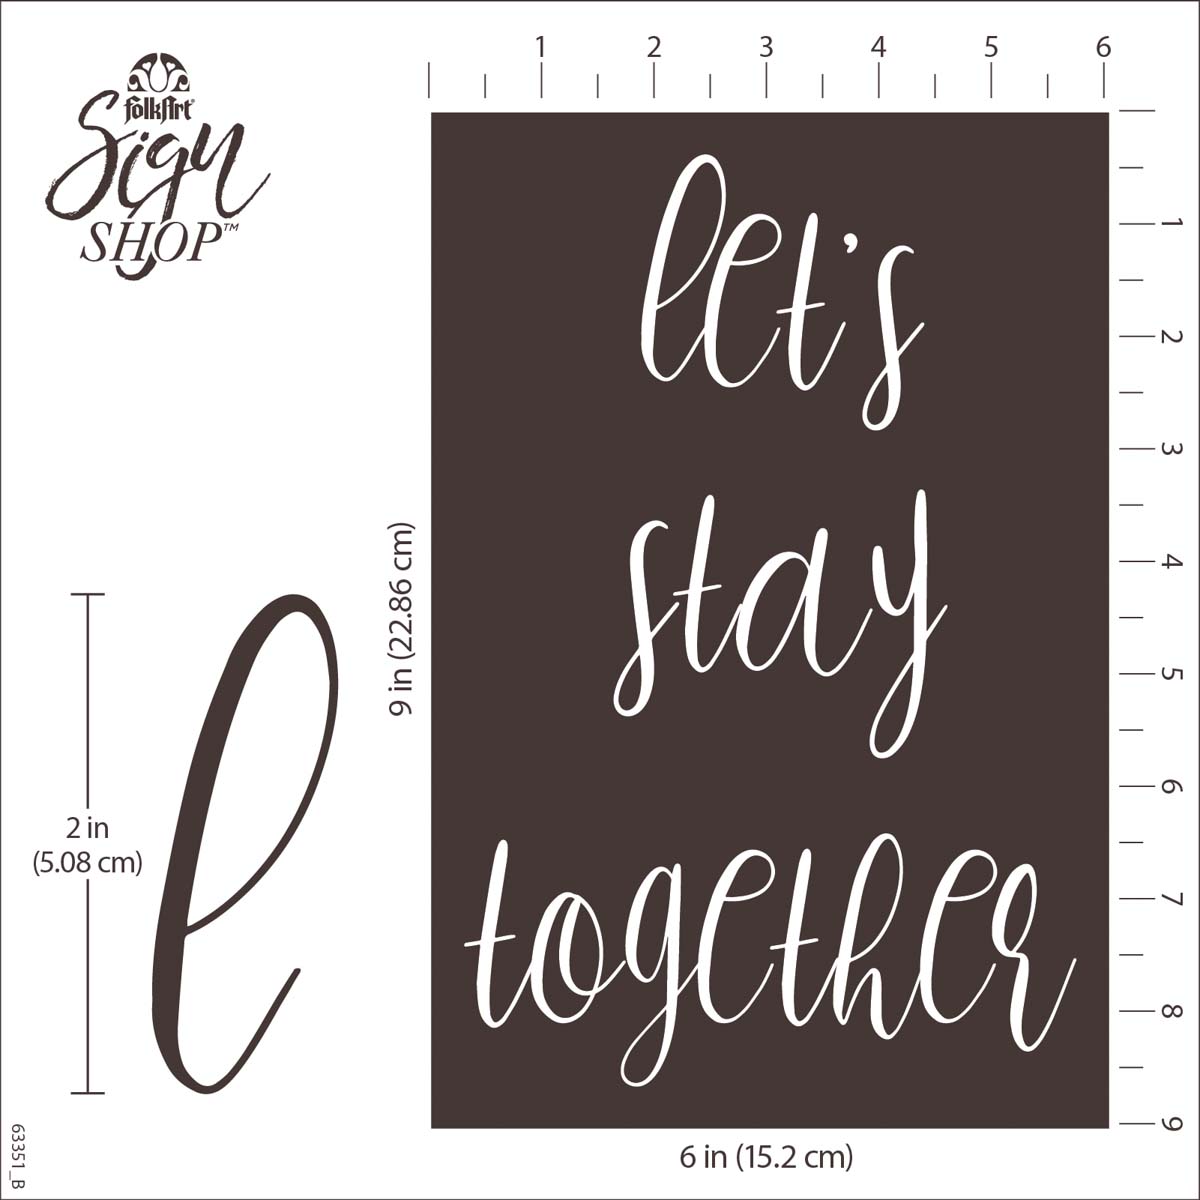 FolkArt ® Sign Shop™ Mesh Stencil - Let's Stay Together, 2 pc. - 63351